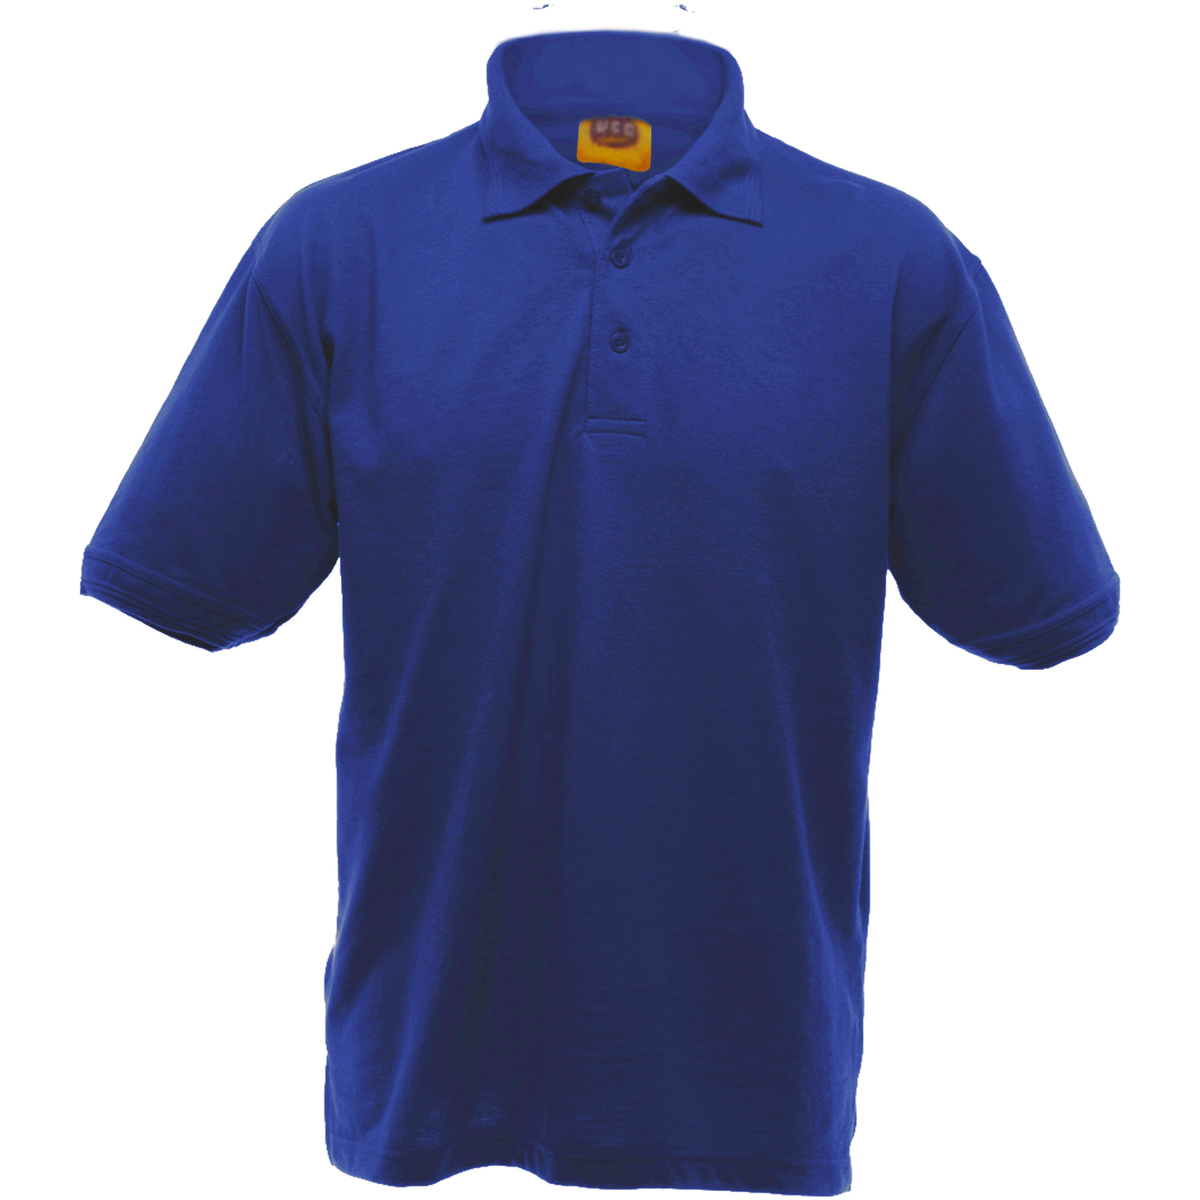 Vêtements Homme Jcotexas Shirt Ss Plain Deep Water UCC004 Multicolore